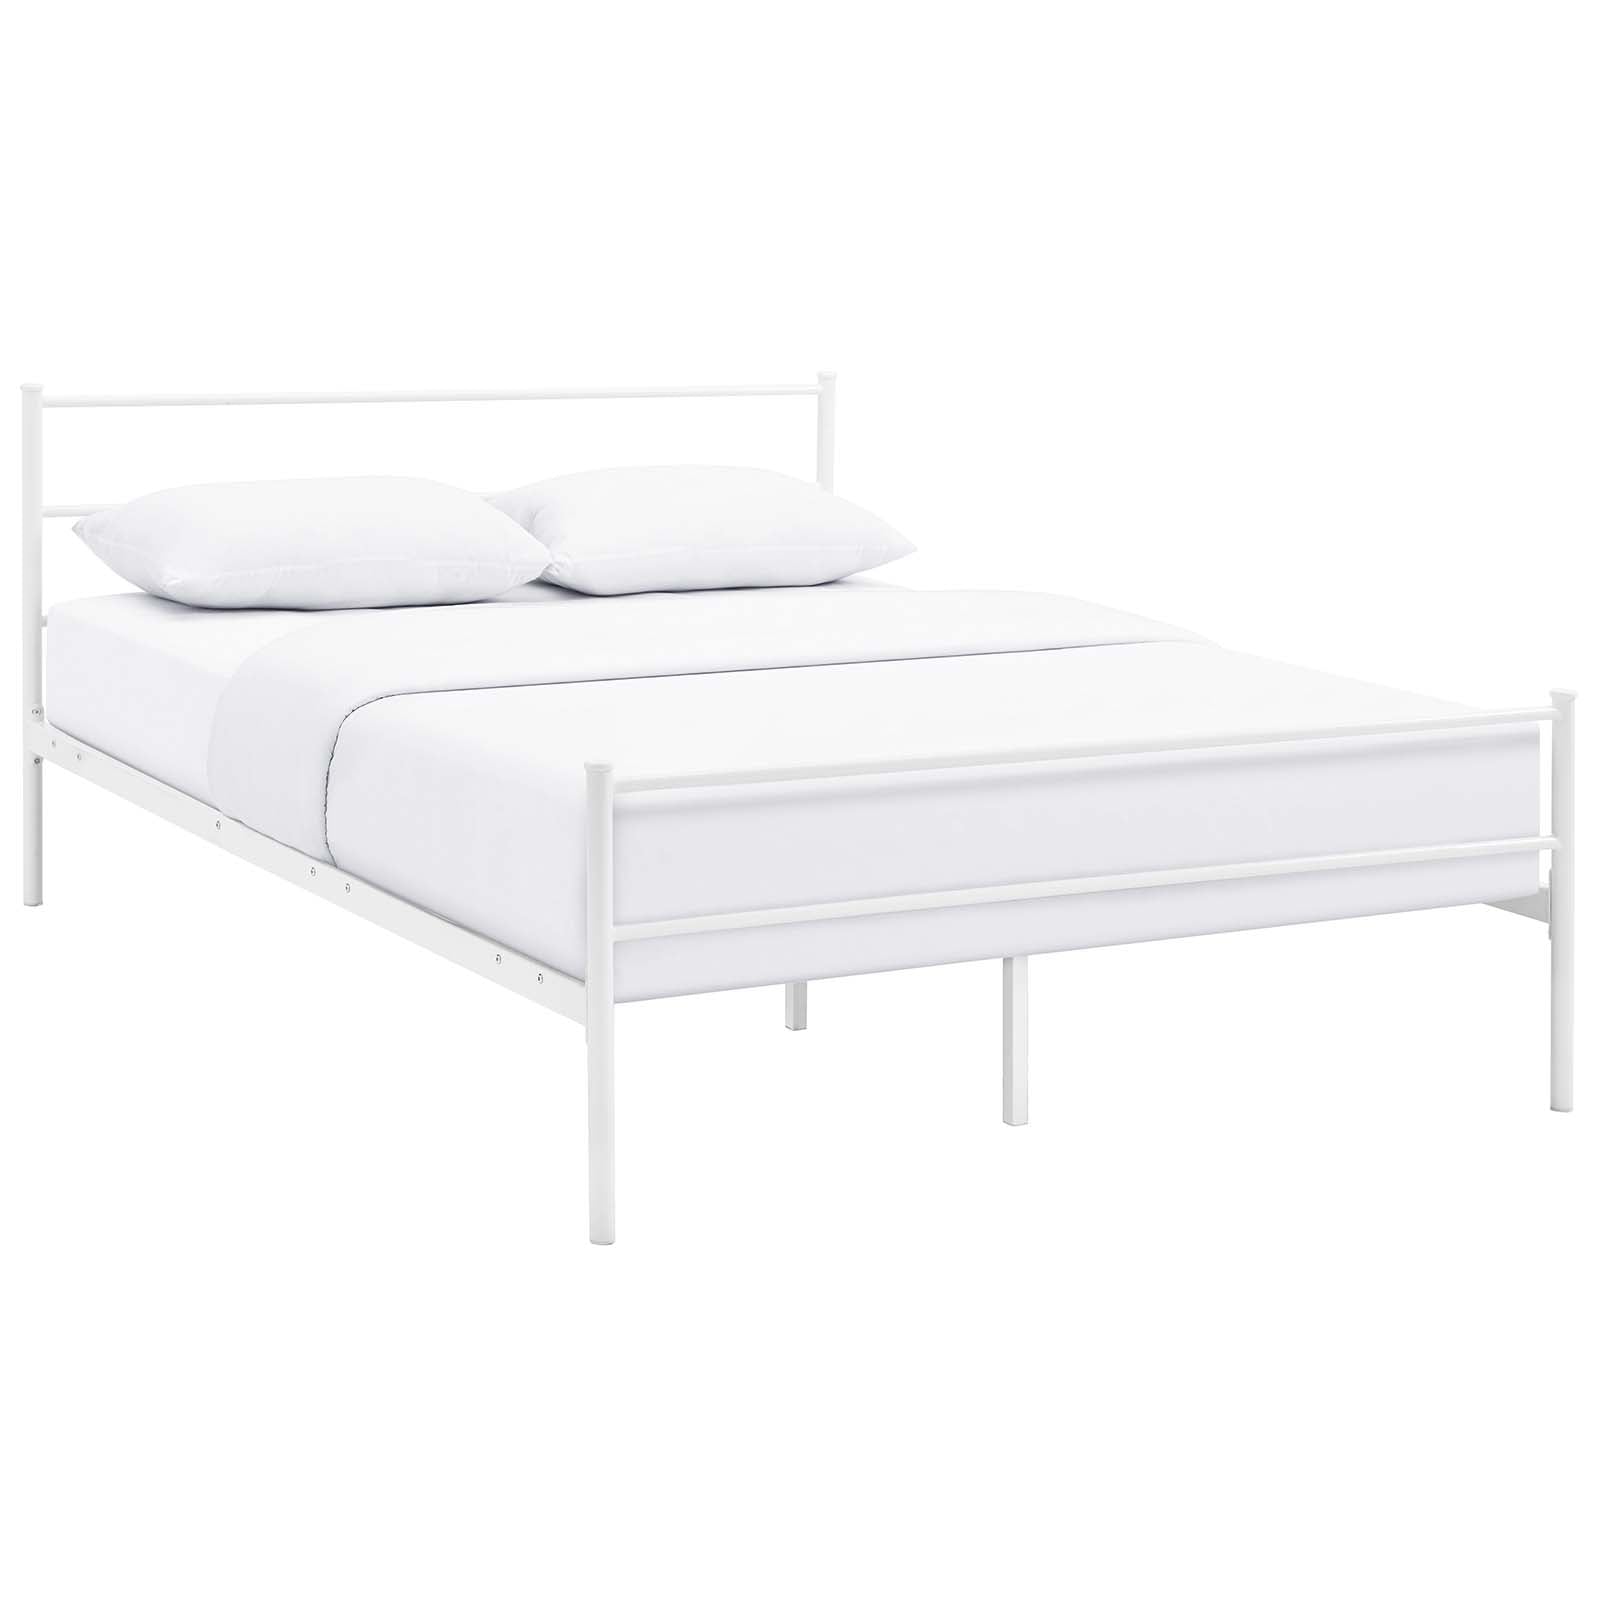 Modway Beds - Alina Queen Platform Bed Frame White